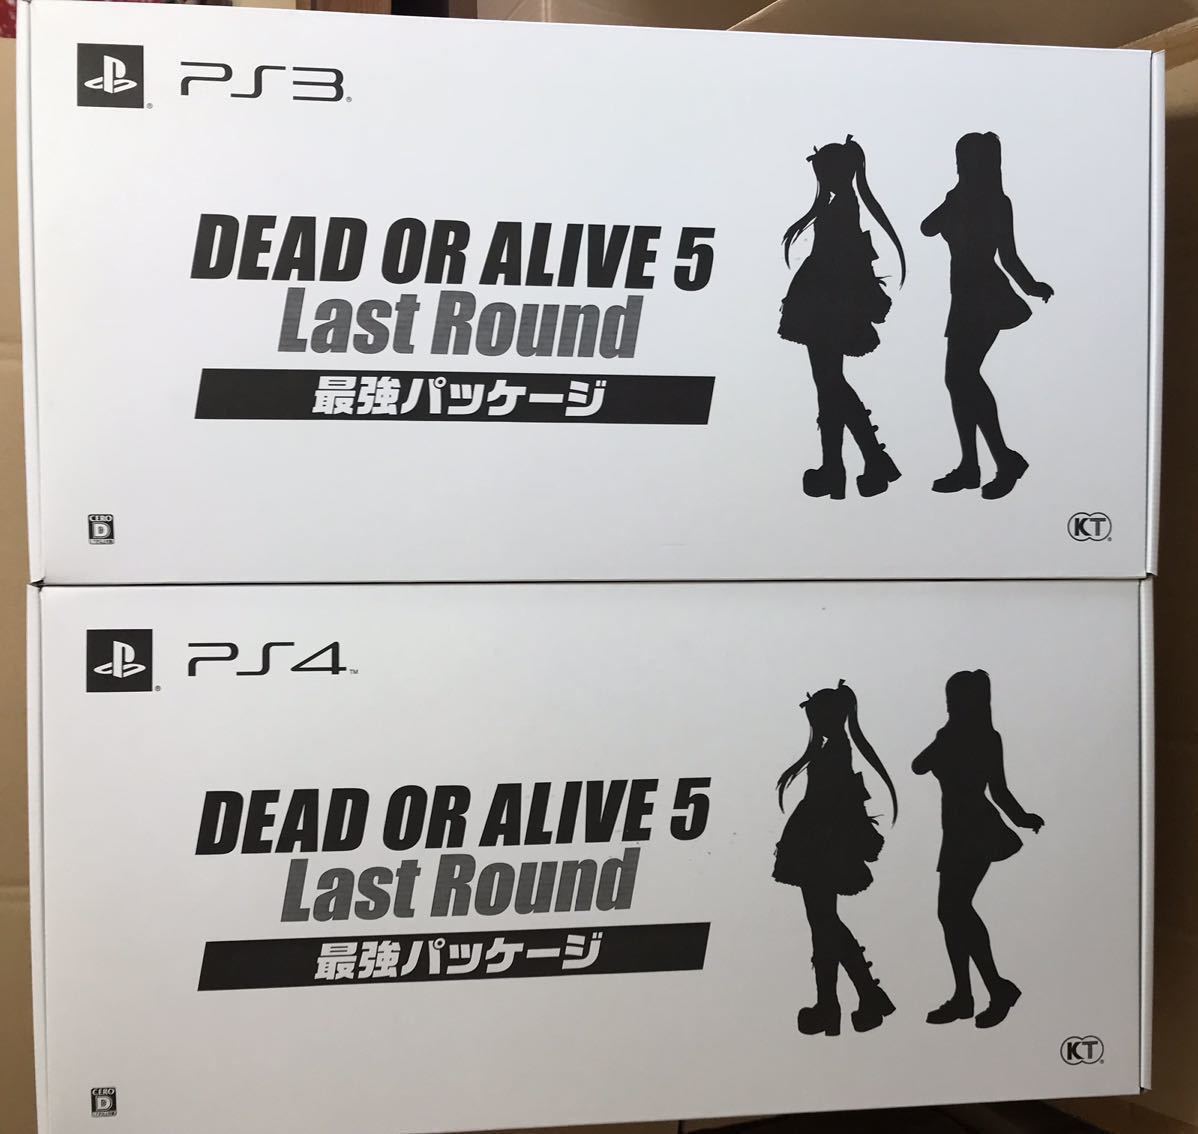 【Amazon.co.jp & GAMECITY限定】DEAD OR ALIVE 5 Last Round 最強パッケージ 初回封入特典(ダウンロードシリアル)付 - PS4版＋PS3版セット